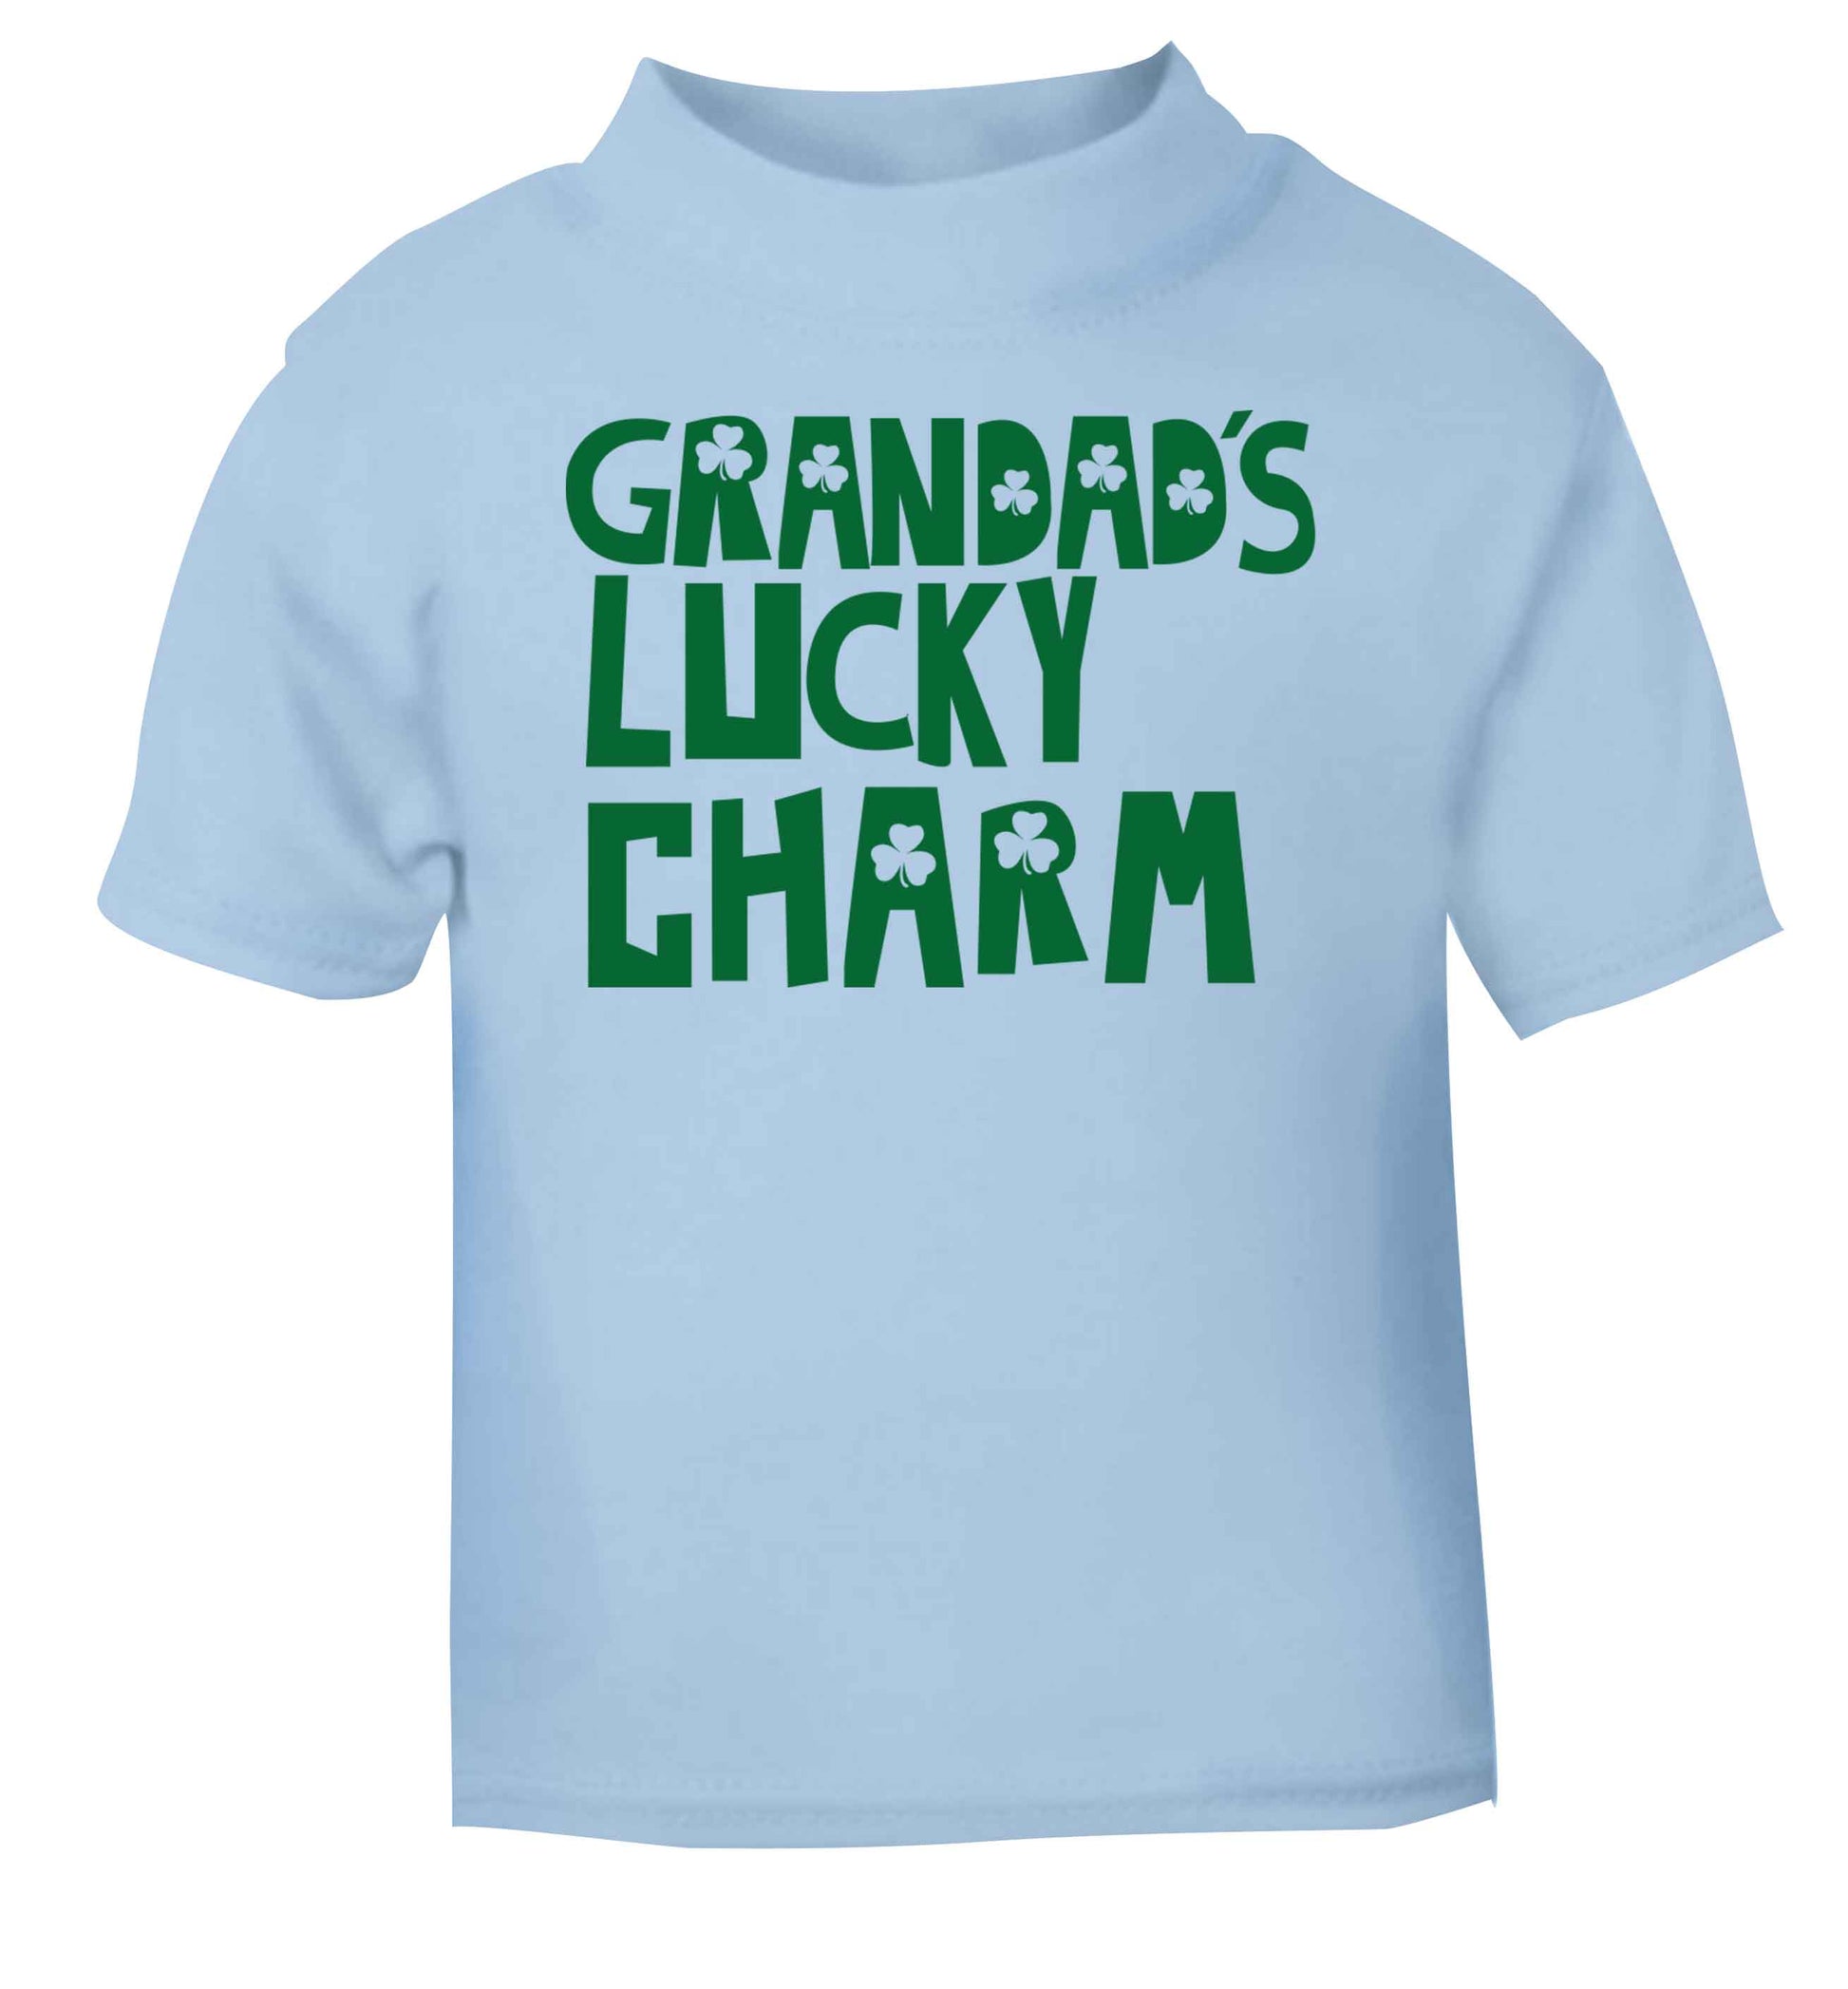 Grandad's lucky charm  light blue baby toddler Tshirt 2 Years